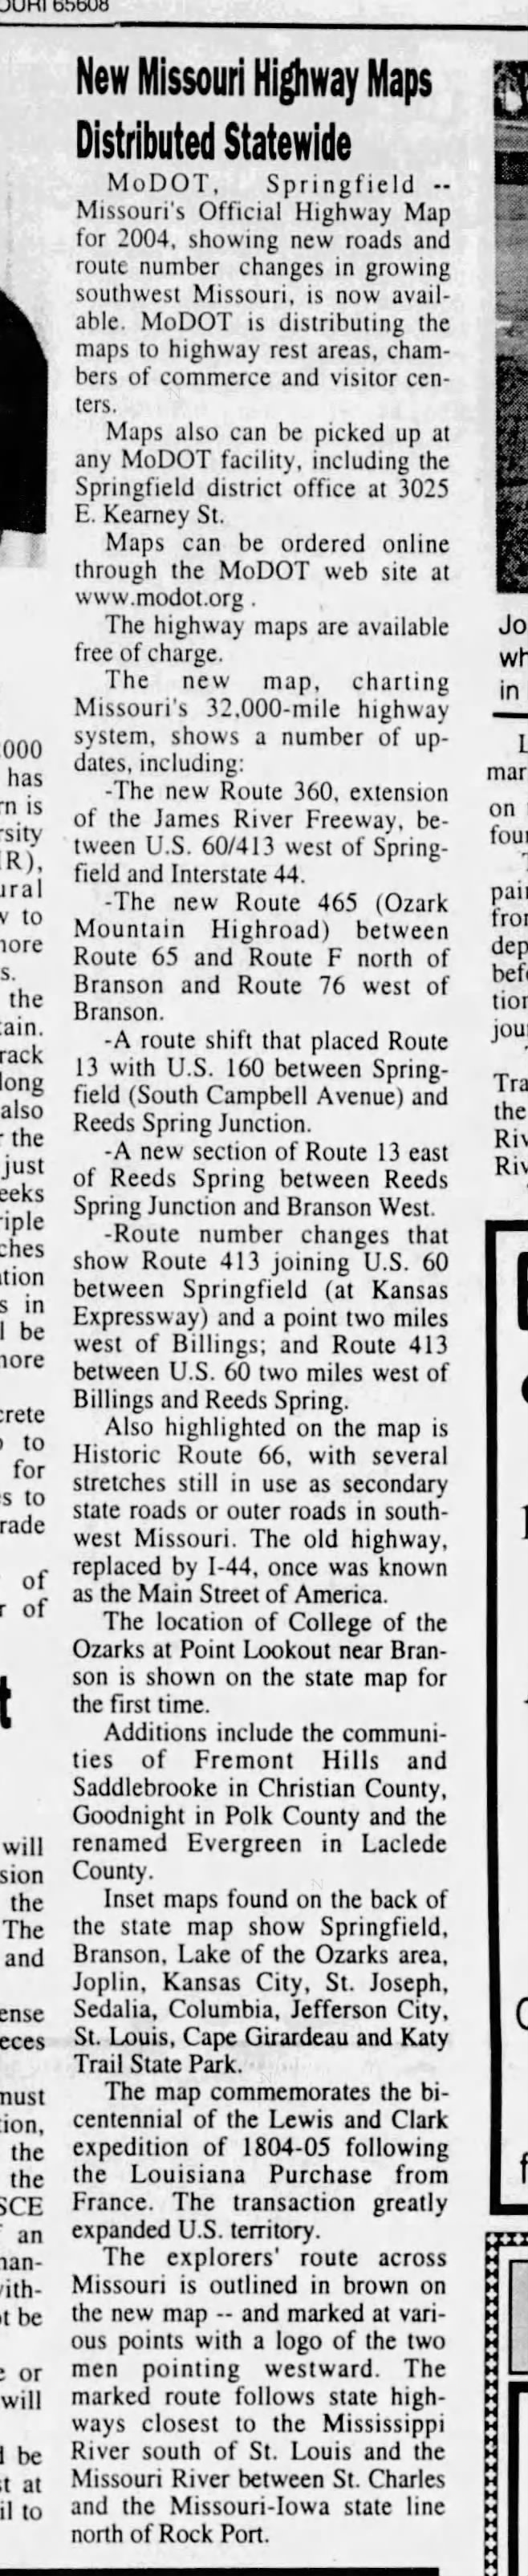 New MO roads, April 22, 2004